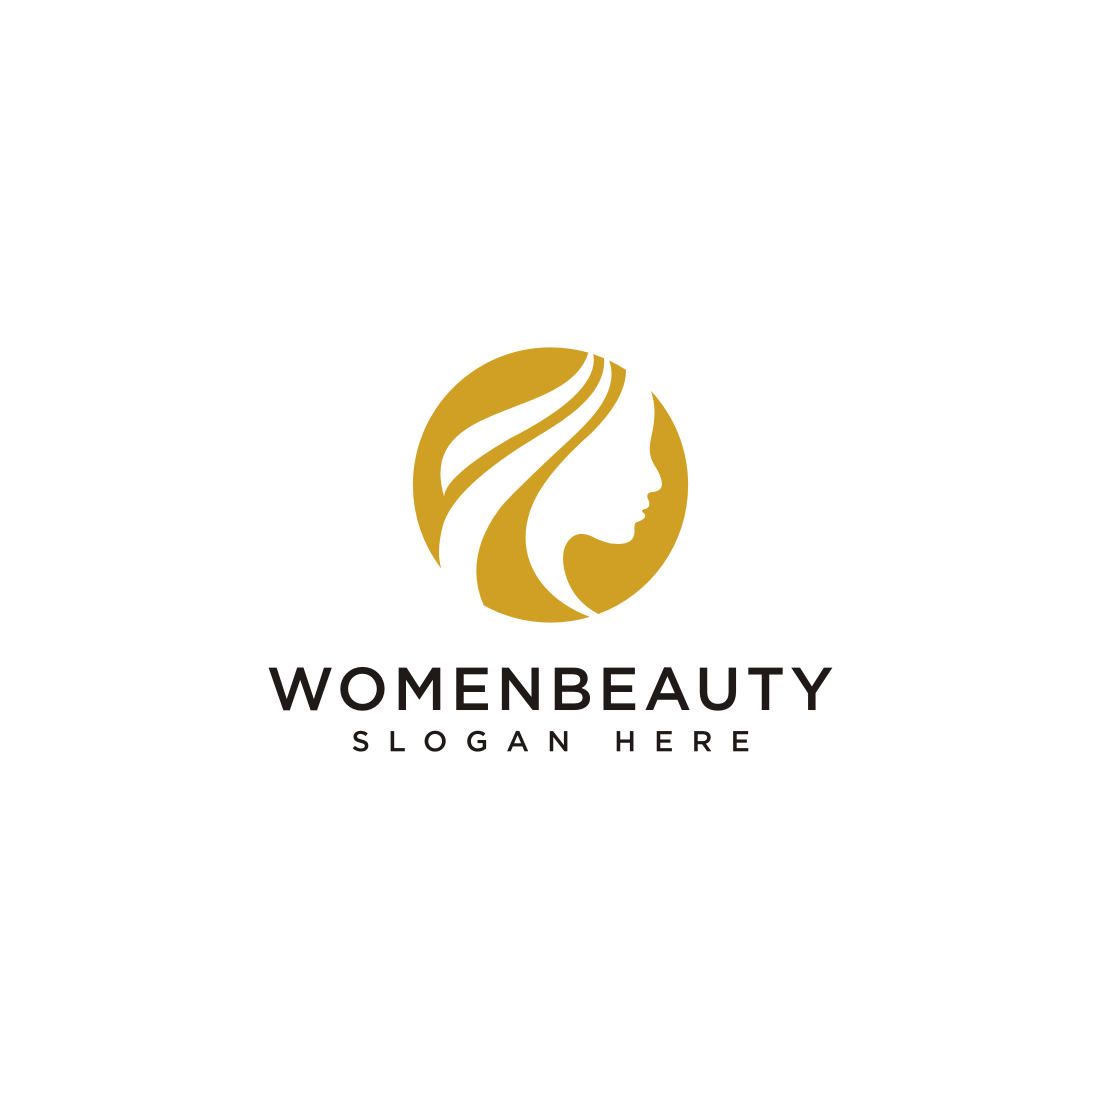 Letter m beauty women face logo design Royalty Free Vector